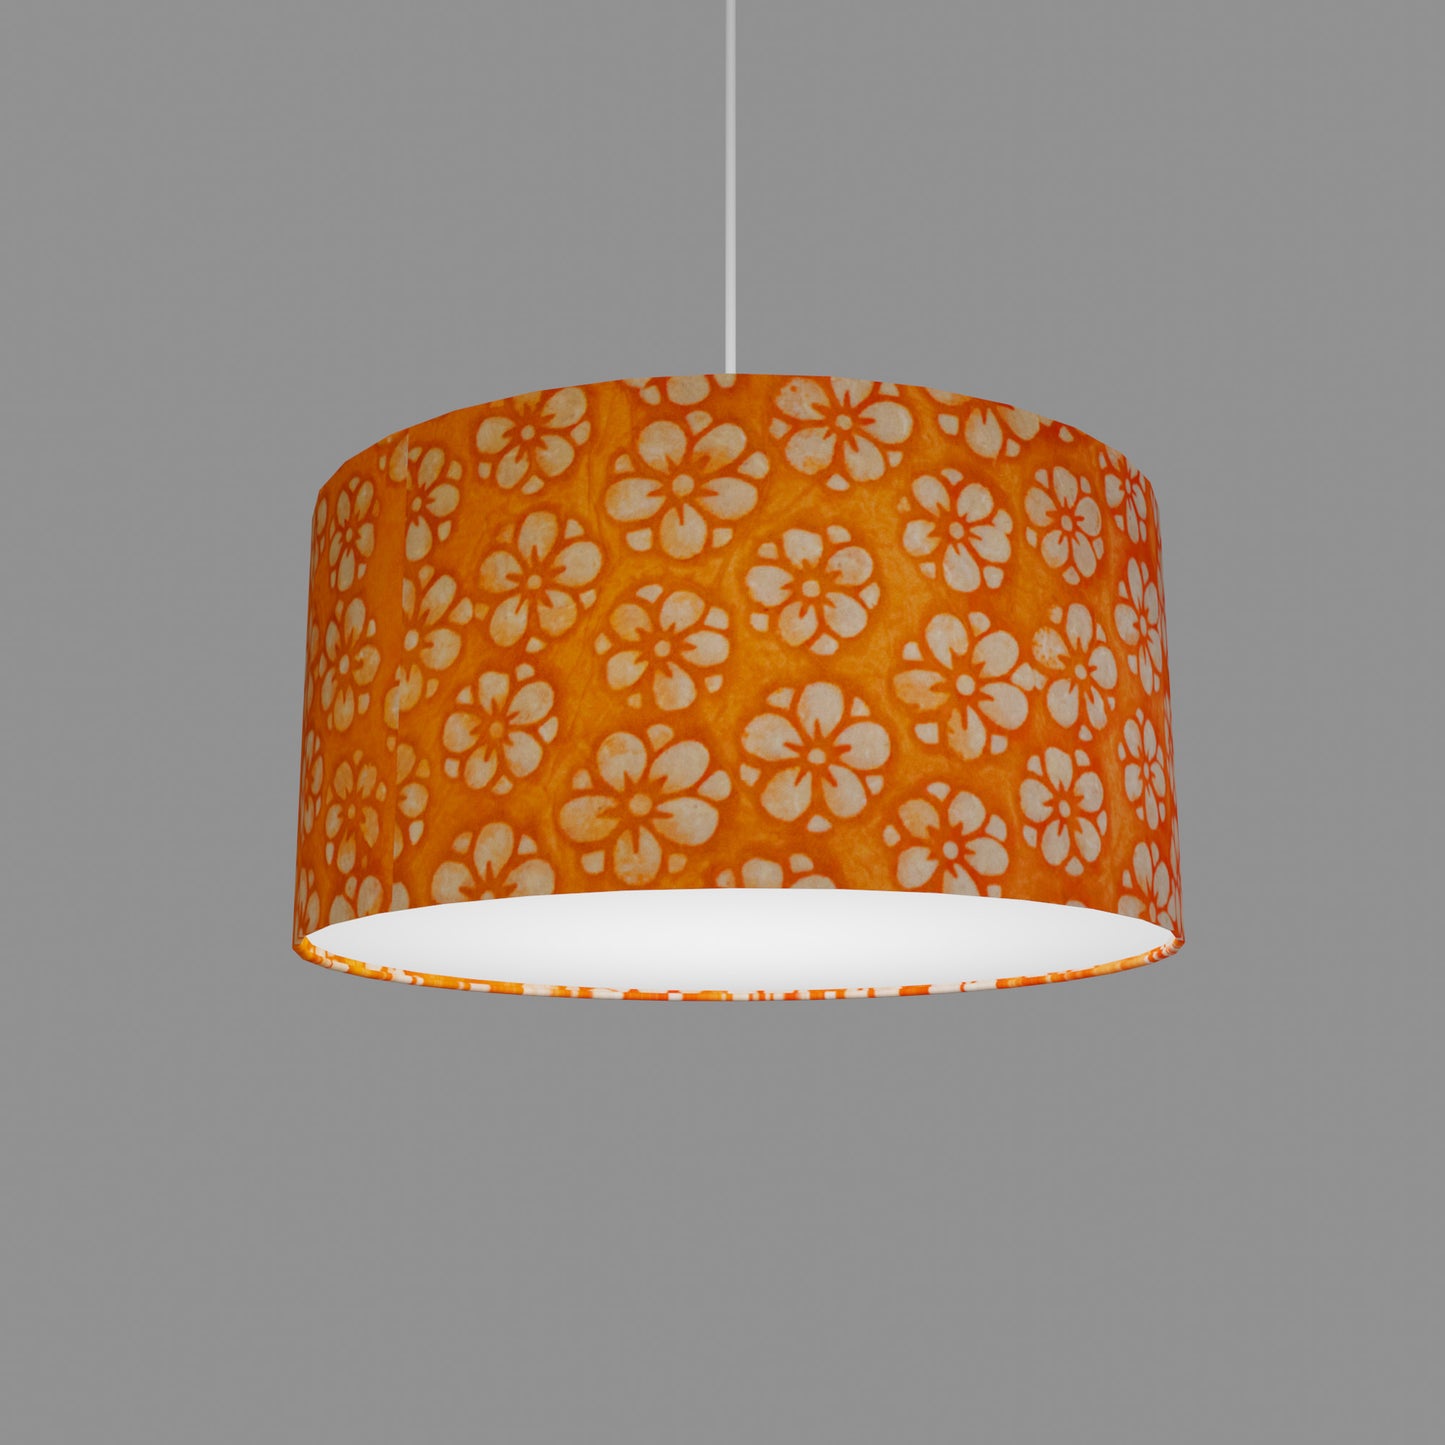 Drum Lamp Shade - P94 - Batik Star Flower on Orange, 40cm(d) x 20cm(h)